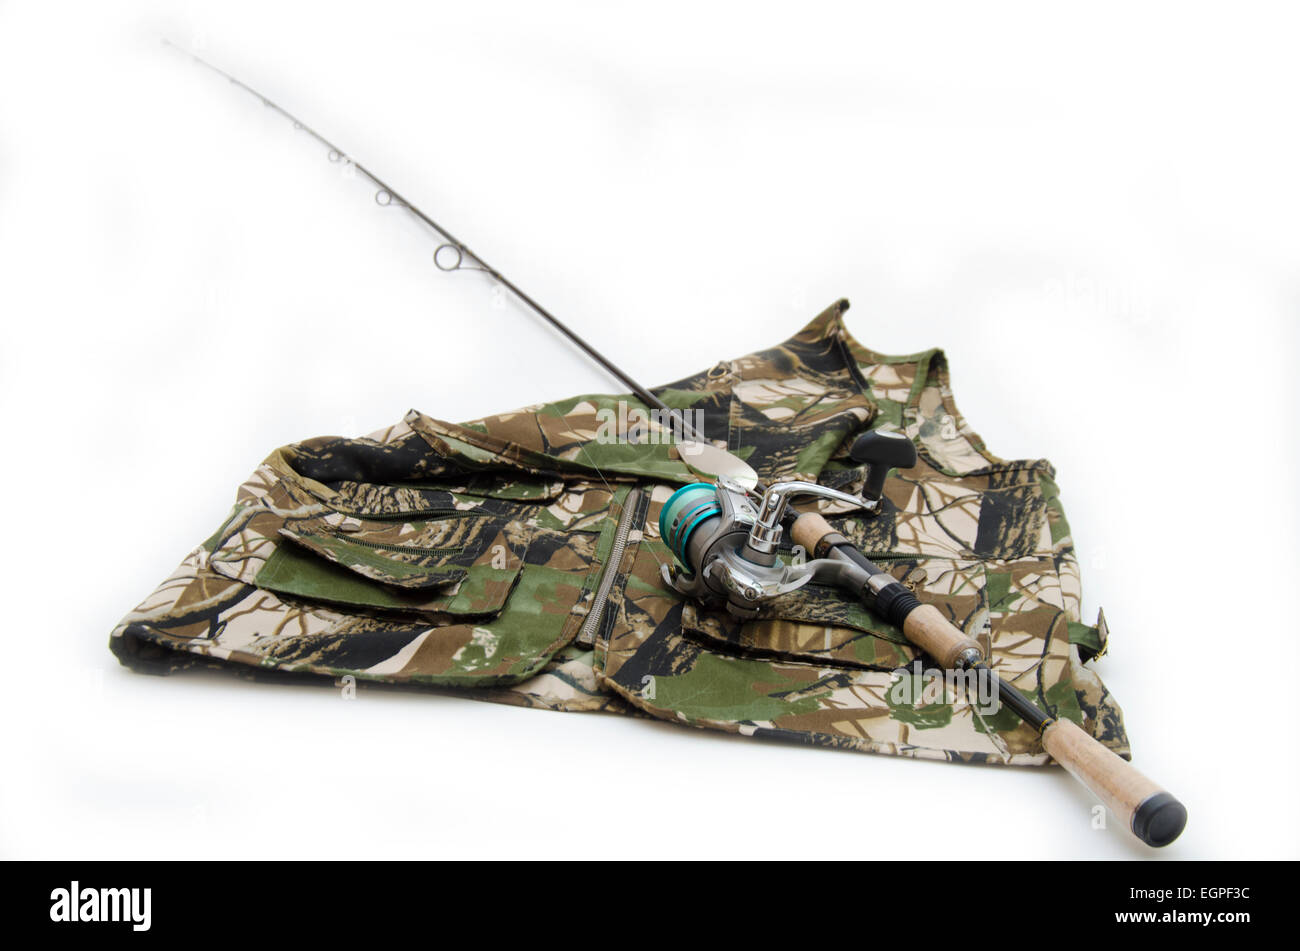 https://c8.alamy.com/comp/EGPF3C/rod-with-reel-on-camouflage-fishing-jacket-isolated-on-white-background-EGPF3C.jpg